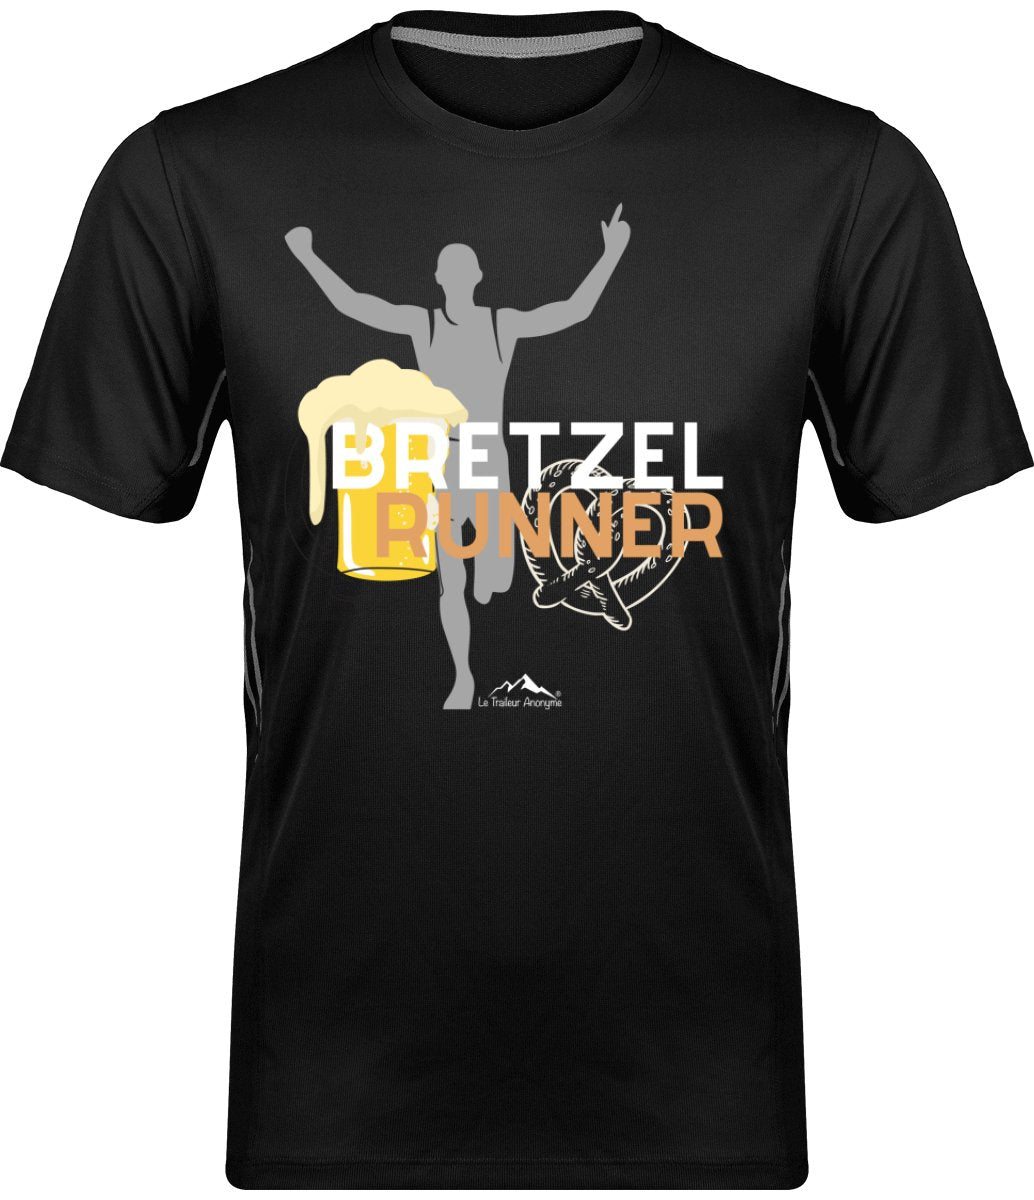 T-Shirt Homme Run- Personnalisé - Bretzel Runner - Le Traileur Anonyme